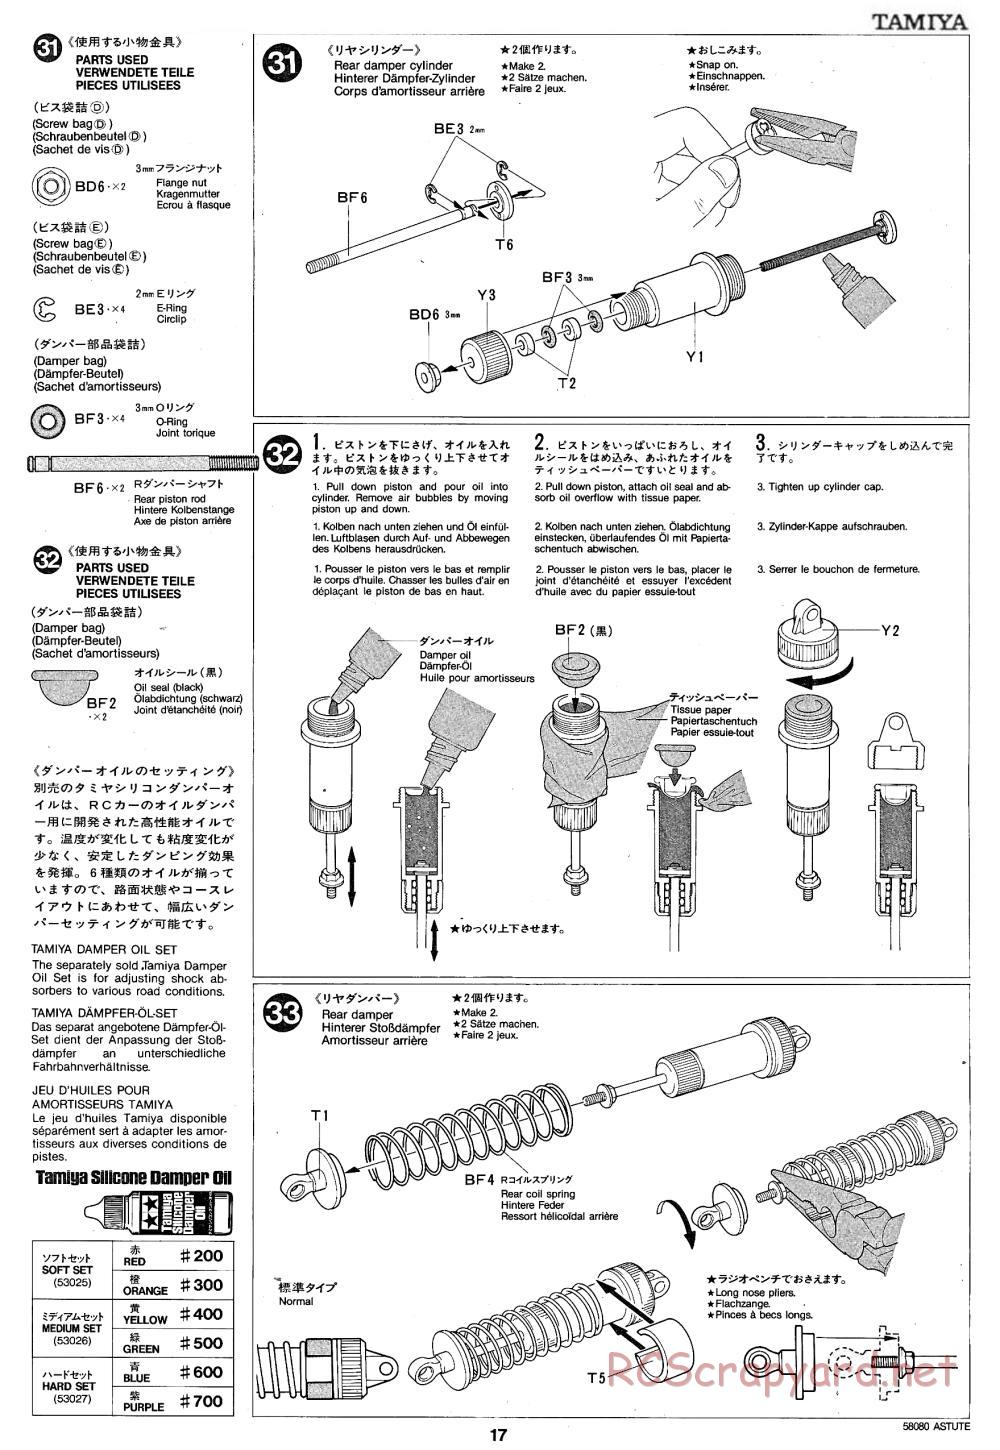 Tamiya - Astute - 58080 - Manual - Page 17